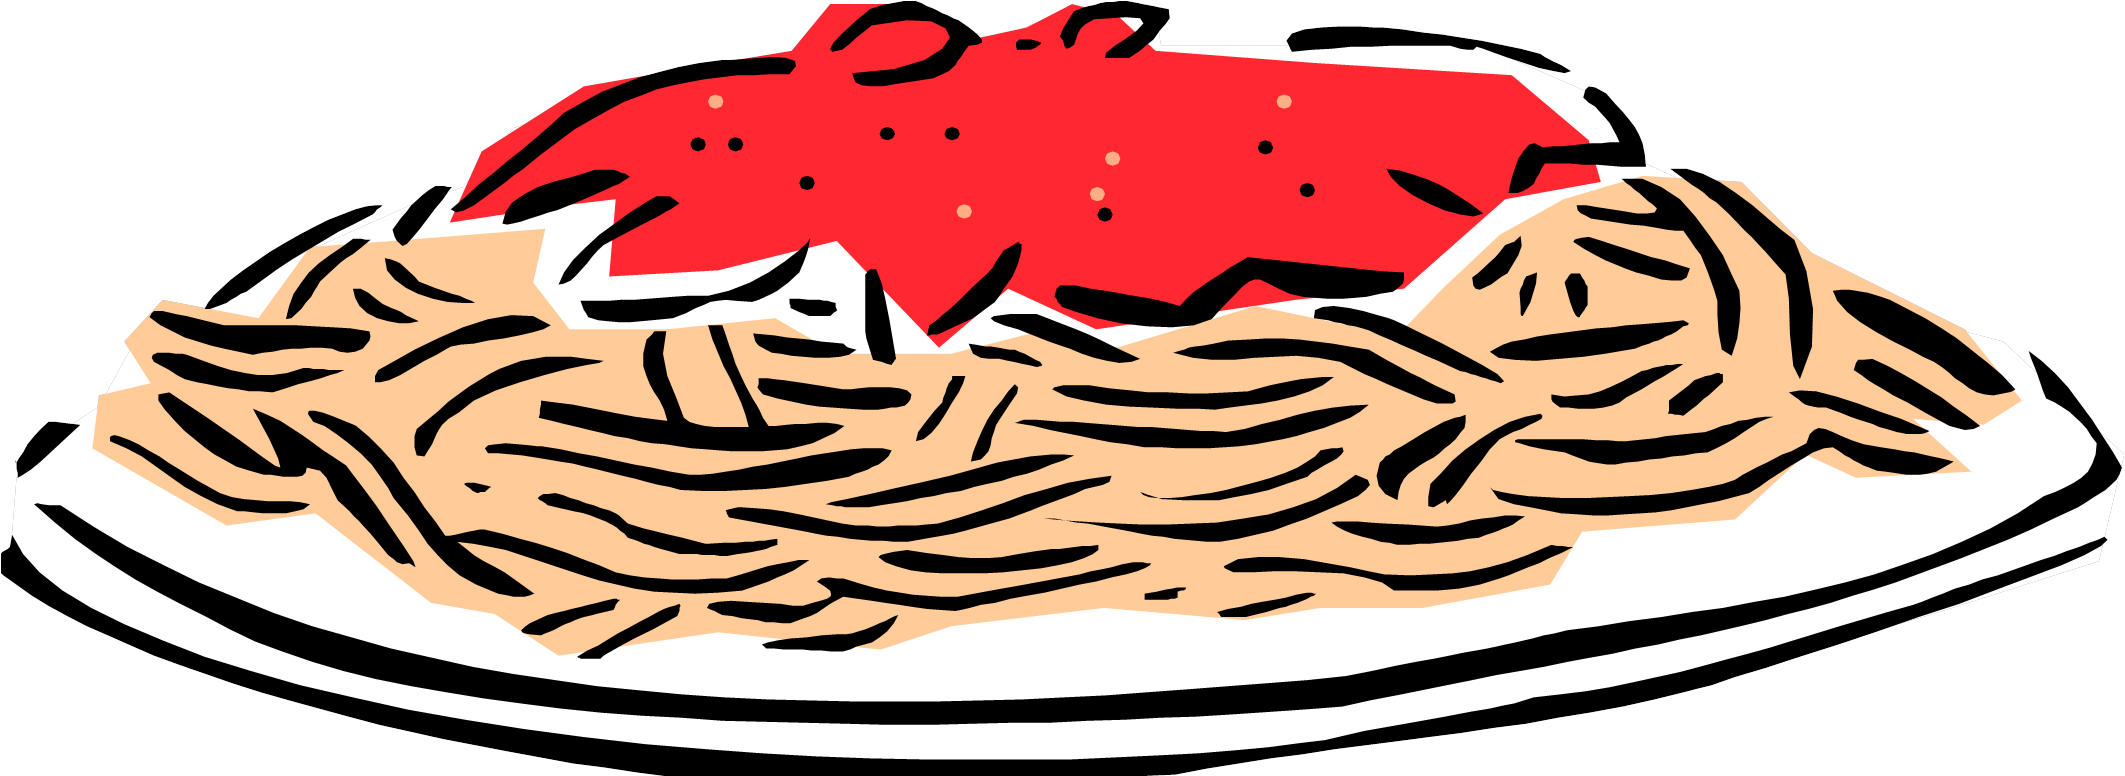 Spaghetti Cartoon Download - Cartoon (2150x775)